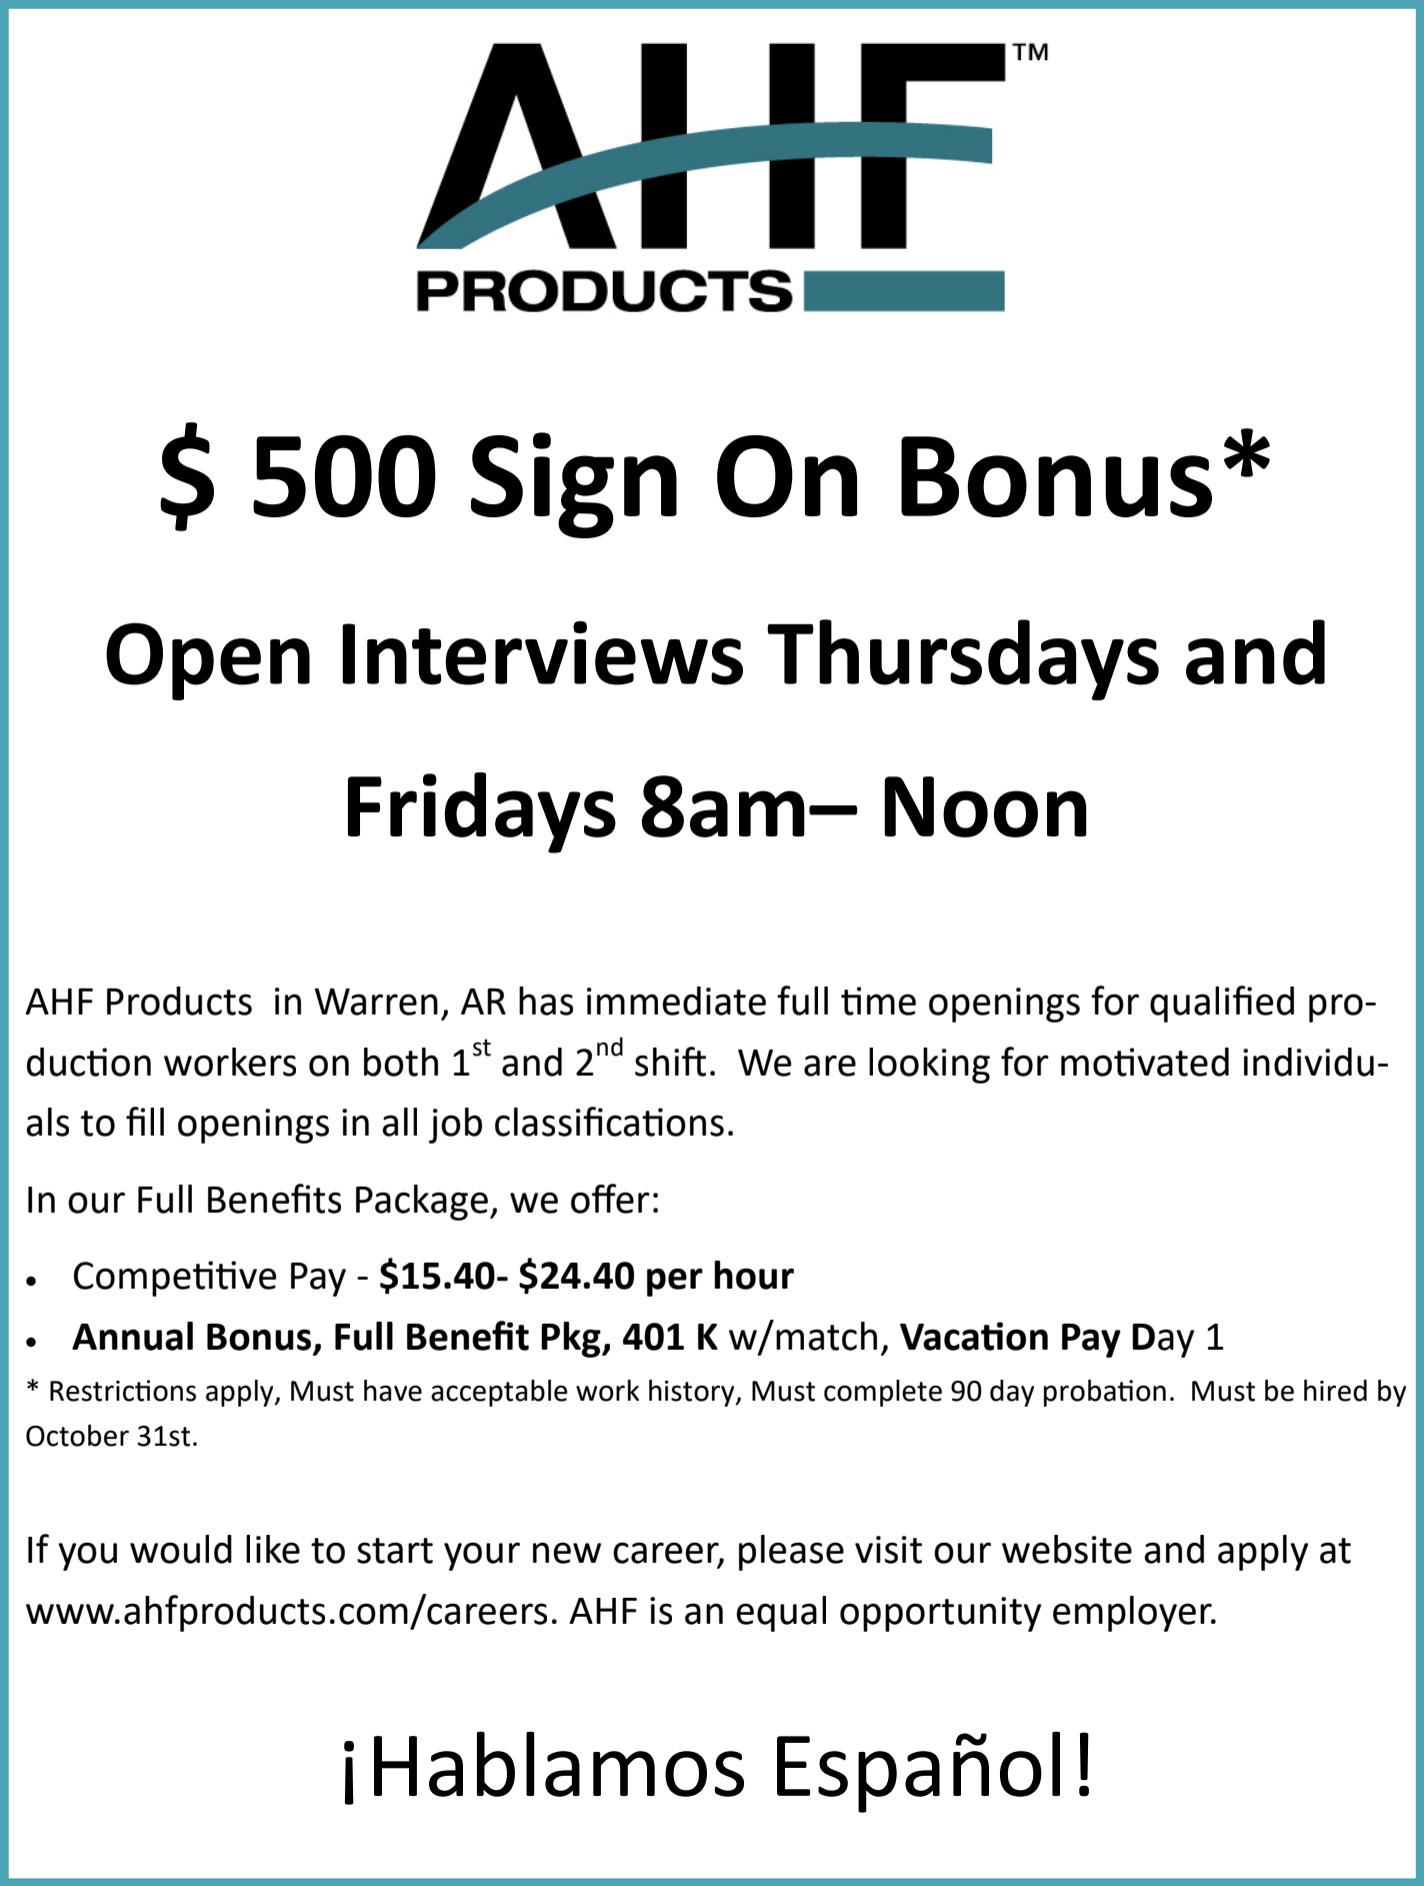 AHF Products is hiring-$500 Sign On Bonus*